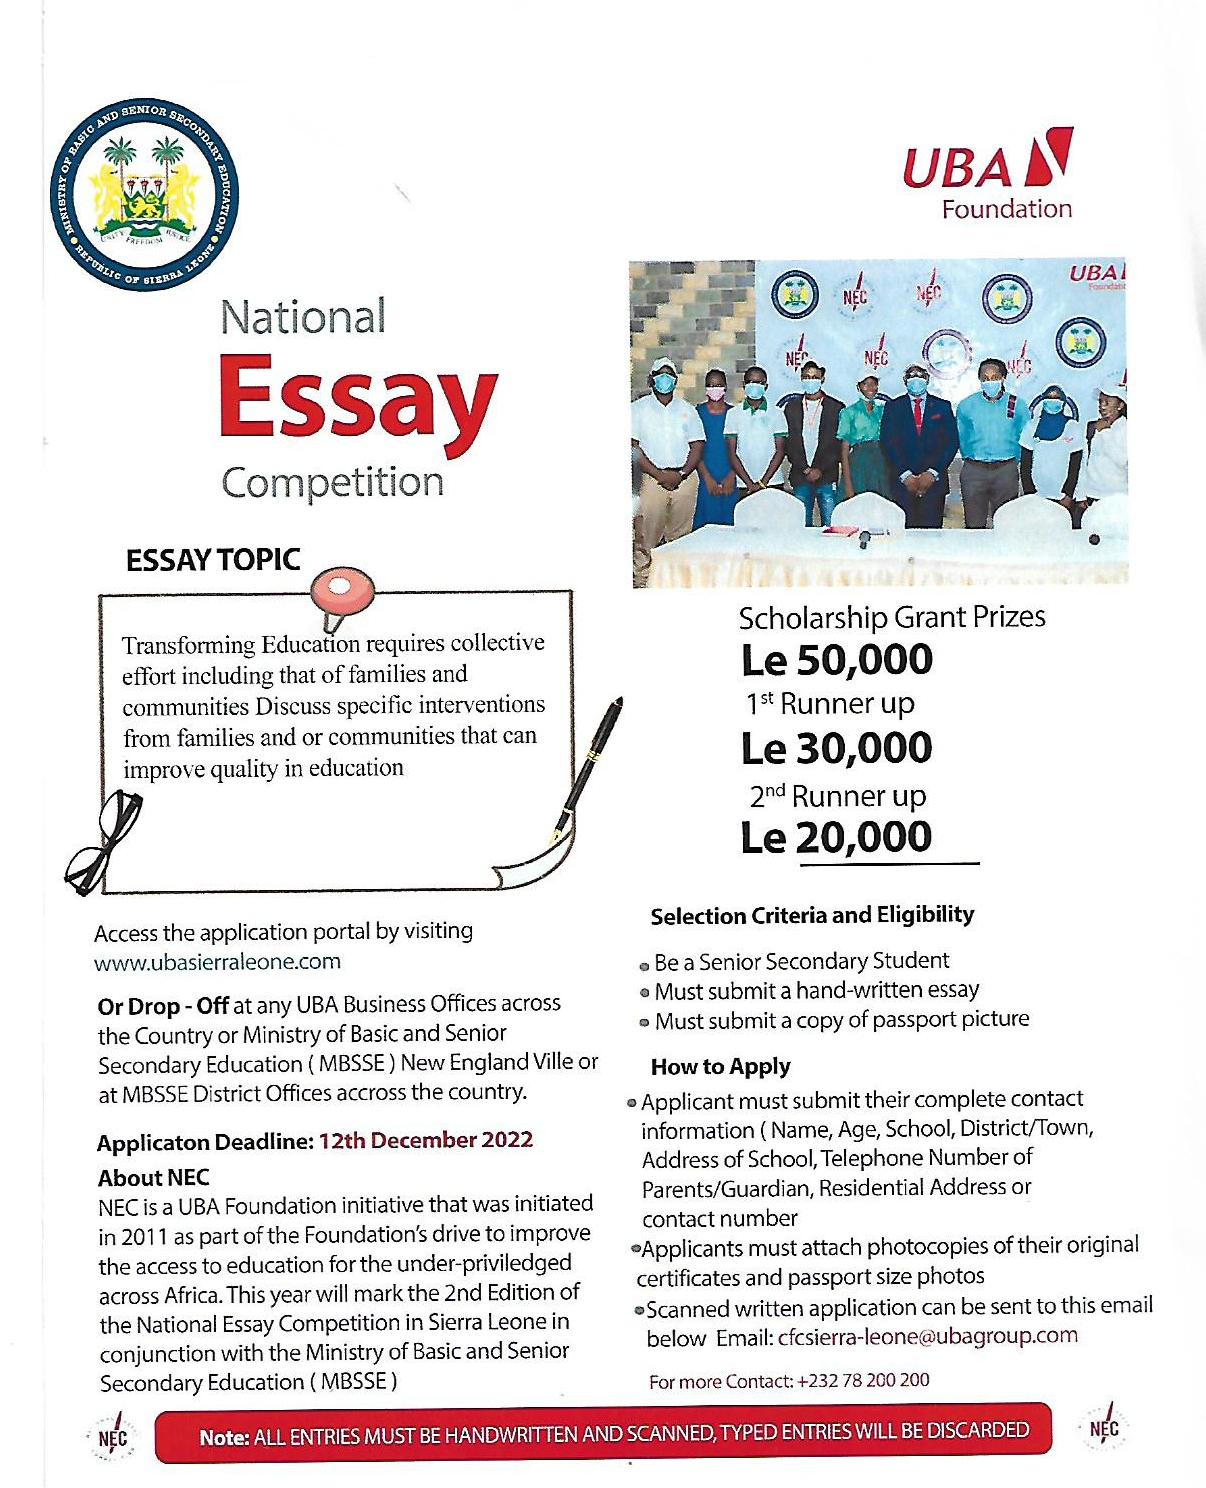 uba foundation international essay competition 2023